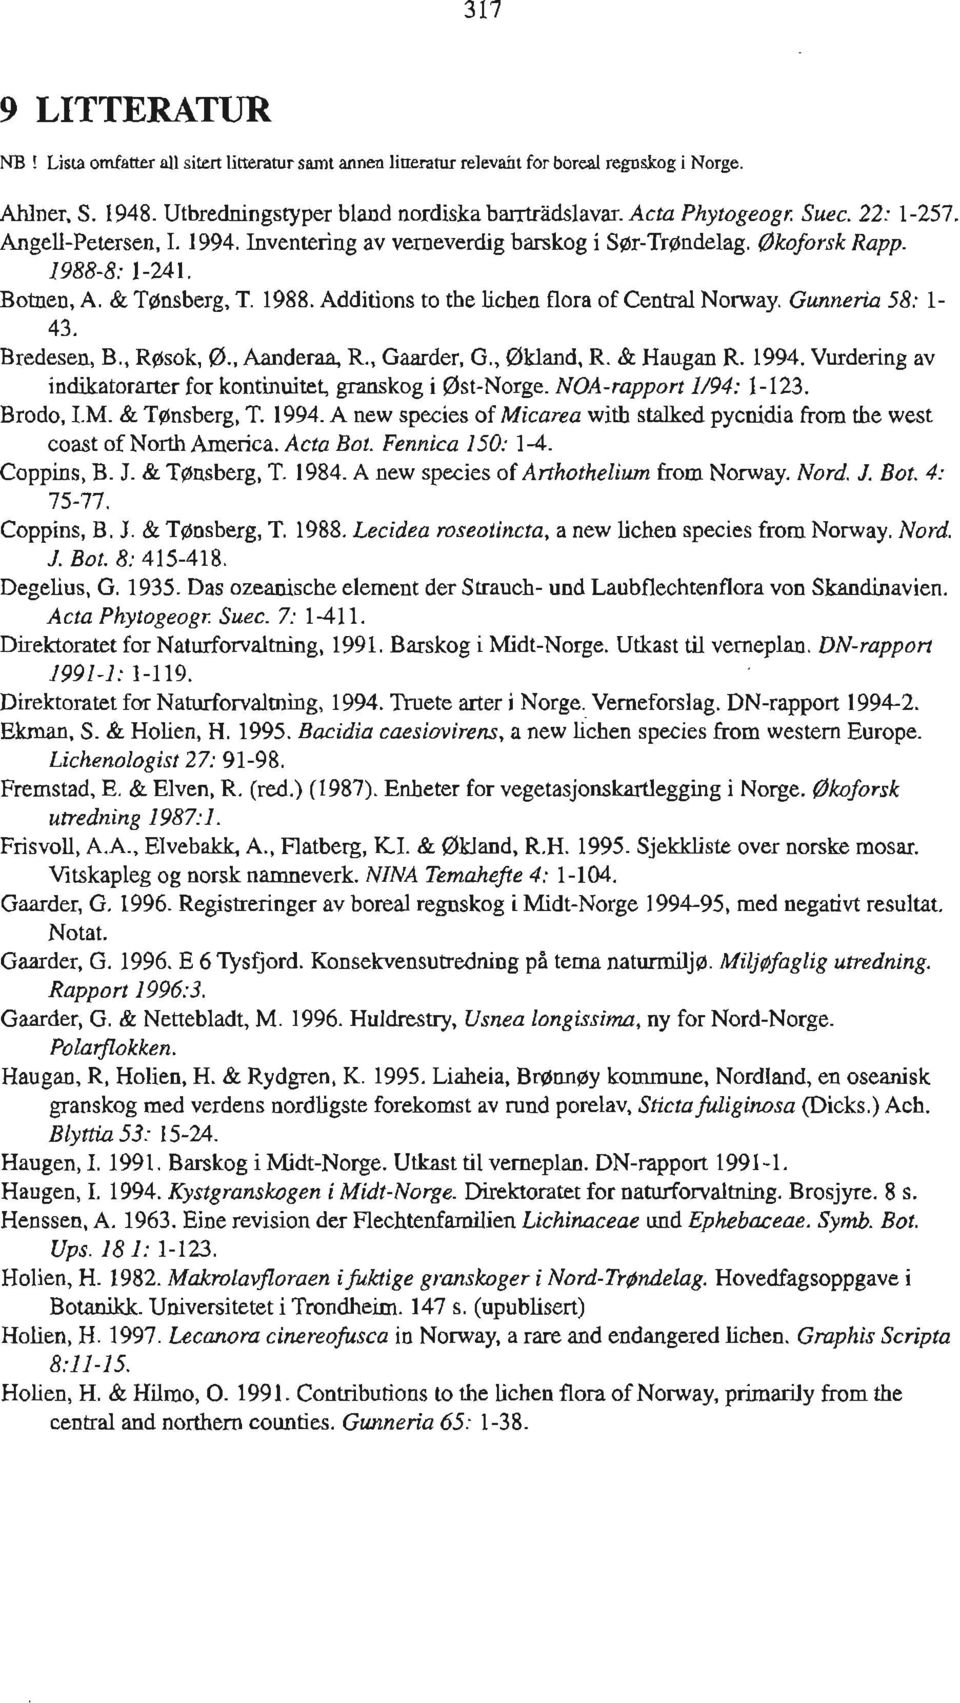 Gunneria 58: 1-43. Bredesen, B., RØSO~, Ø., Aanderaa, R., Gaarder, G., Økland, R. & Haugan R. 1994. Vurdering av indikatorarter for kontinuitet, granskog i Øst-Norge. NOA-rapport 1/94: 1-123.